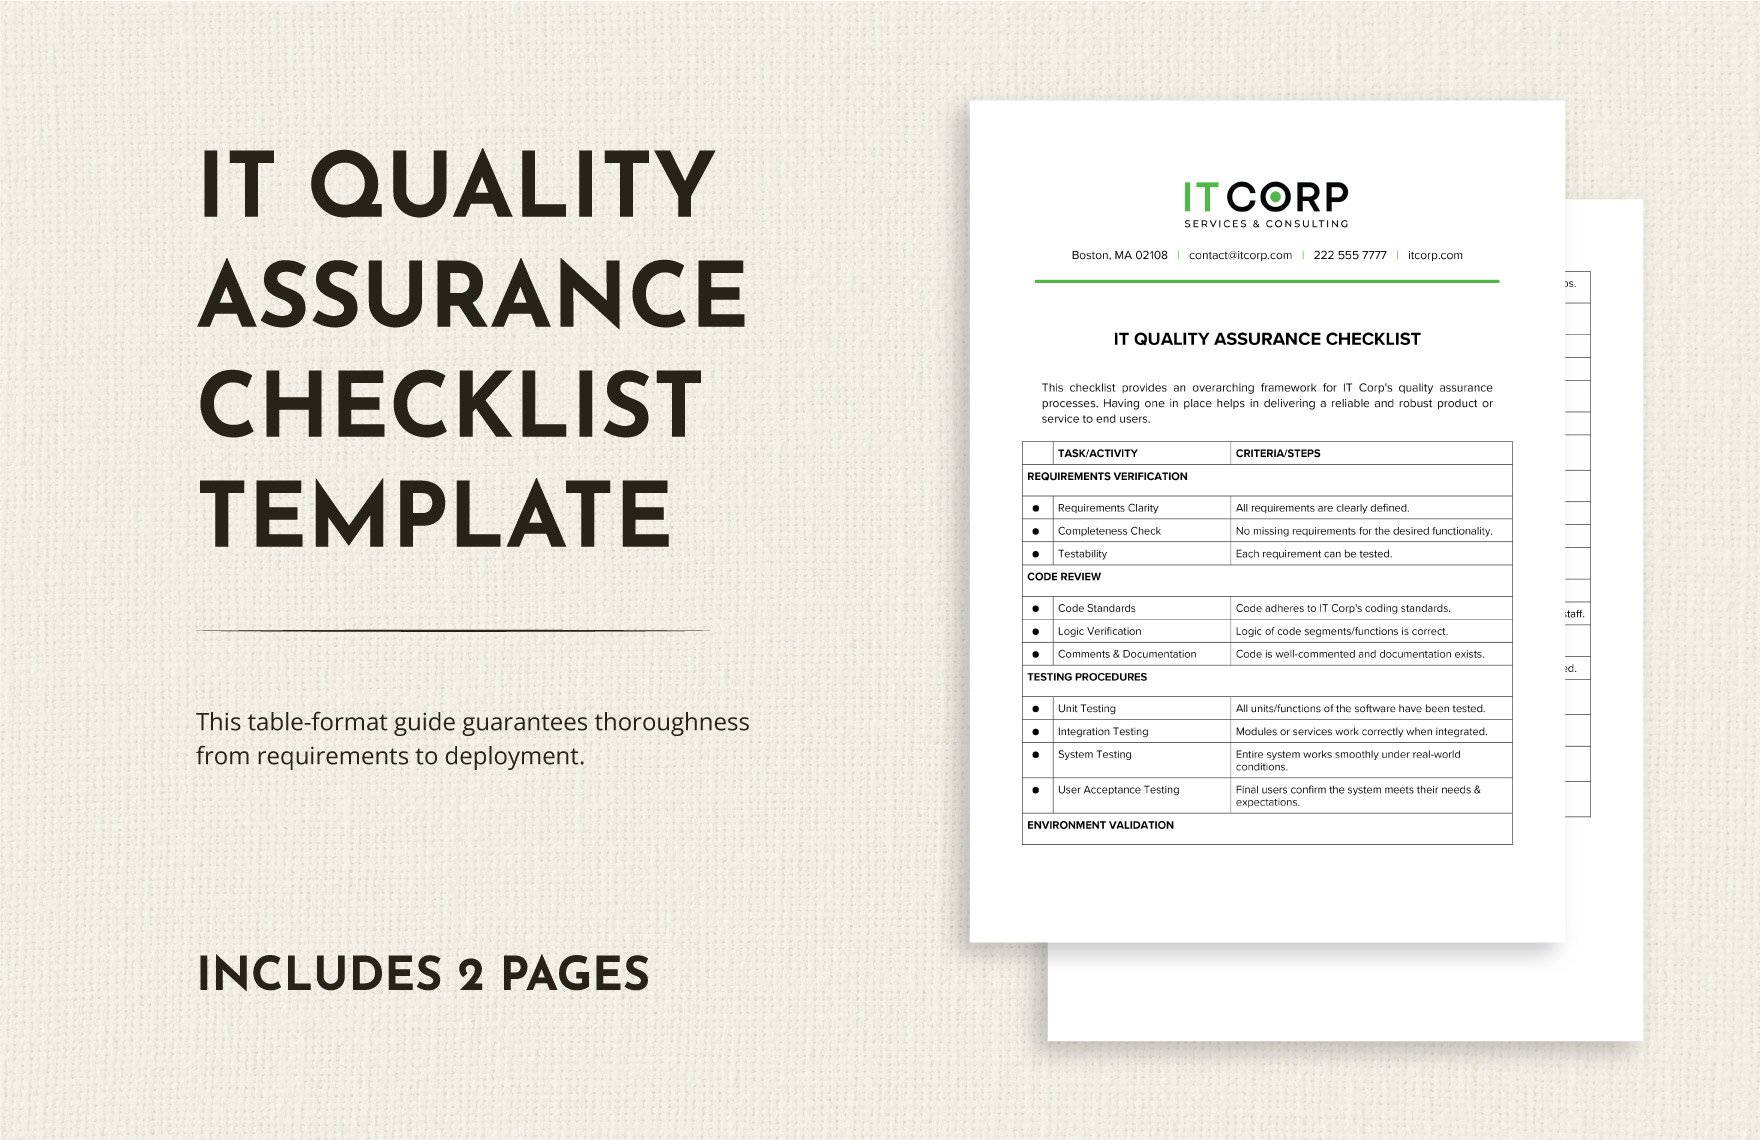 IT Quality Assurance Checklist Template